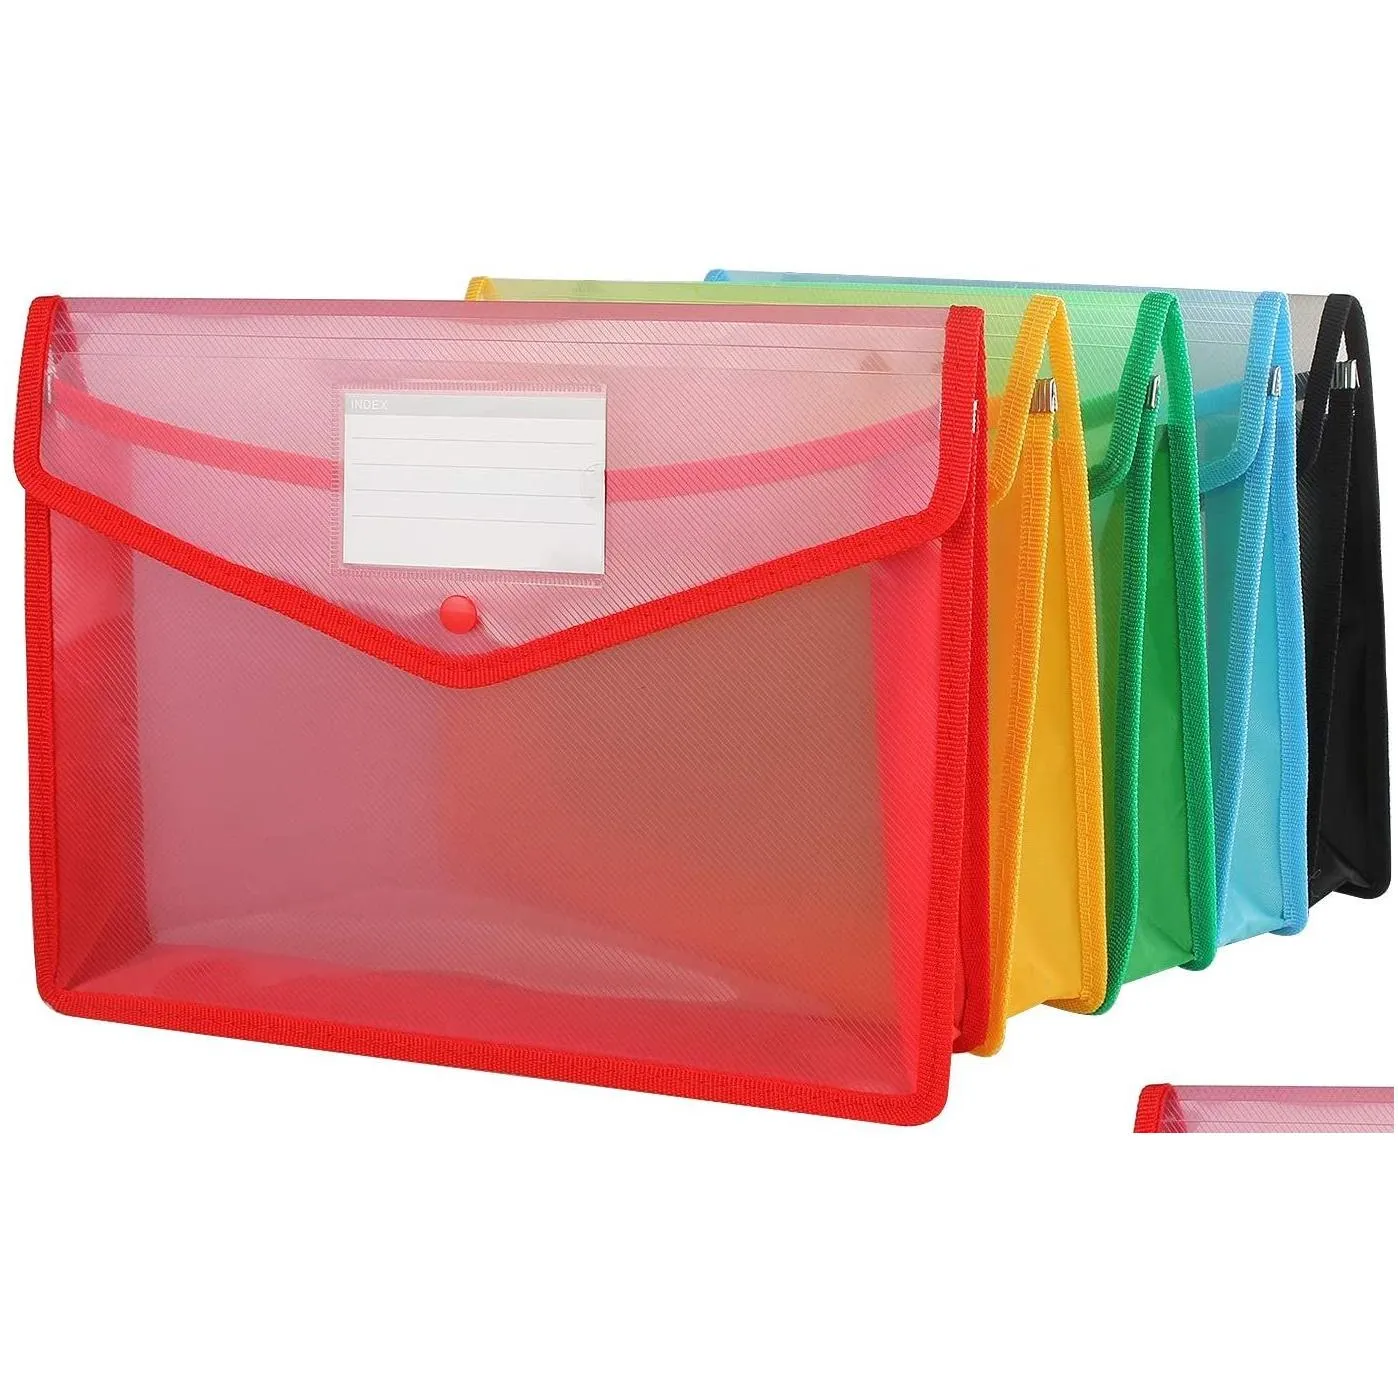 wholesale a4 plastic wallet file folder envelope waterproof poly envelope plastics files wallets document folders with button closure for